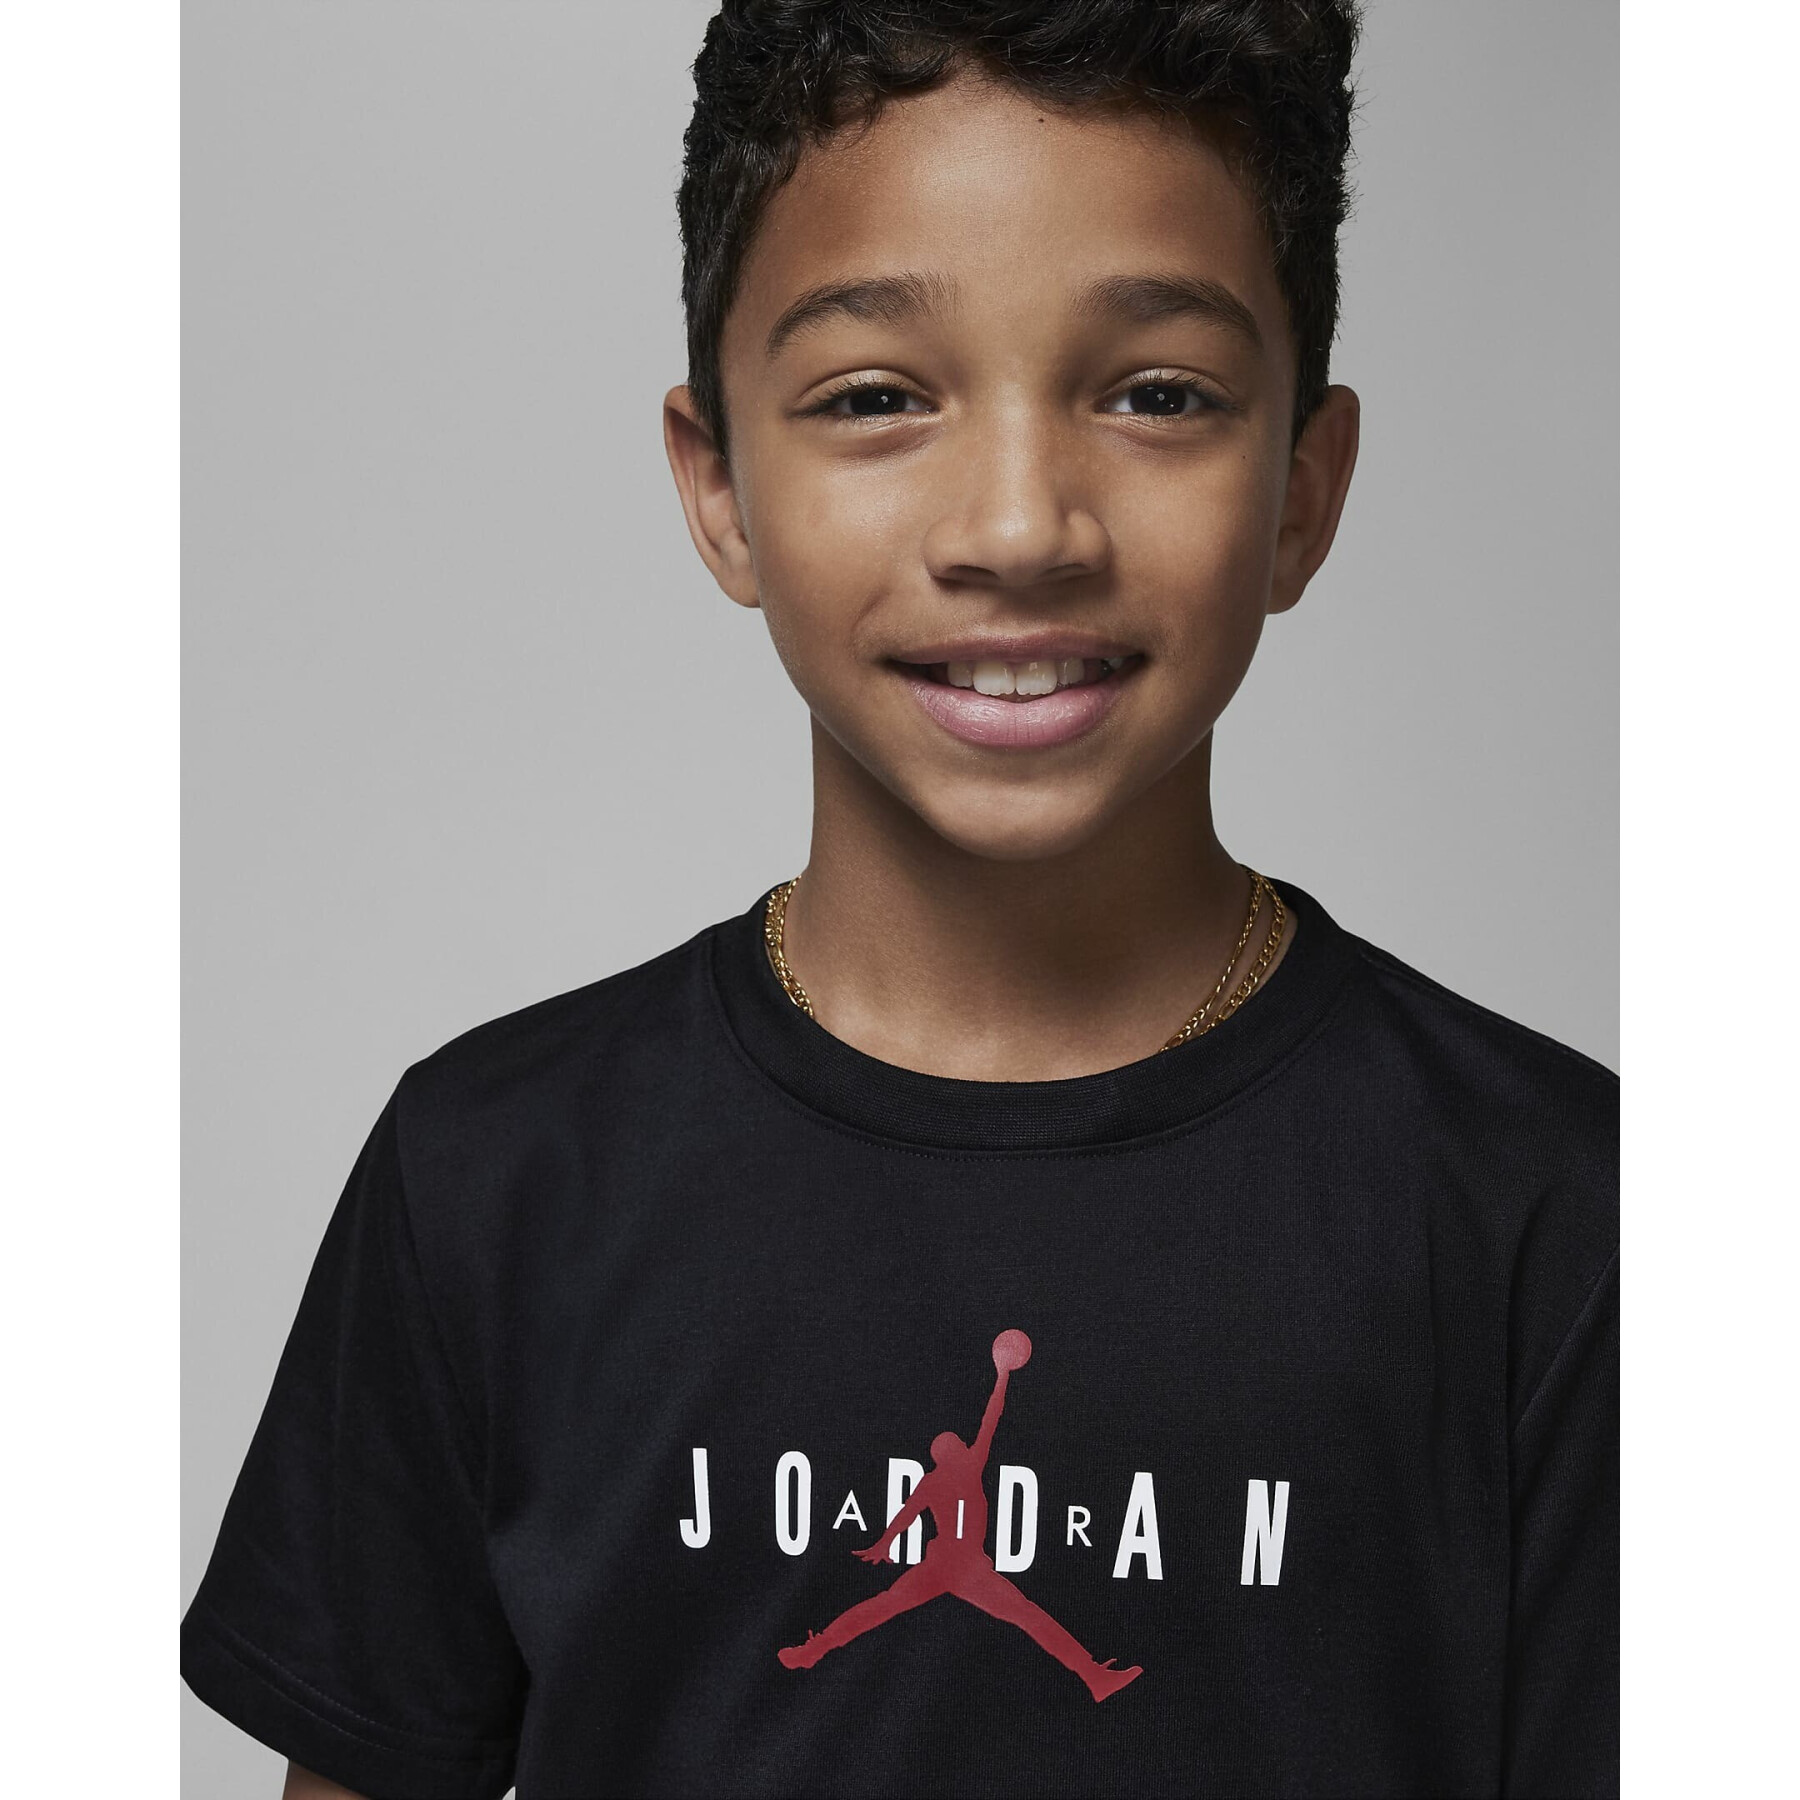 Kinder T-Shirt Jordan Jumpman Sustainable Graphic